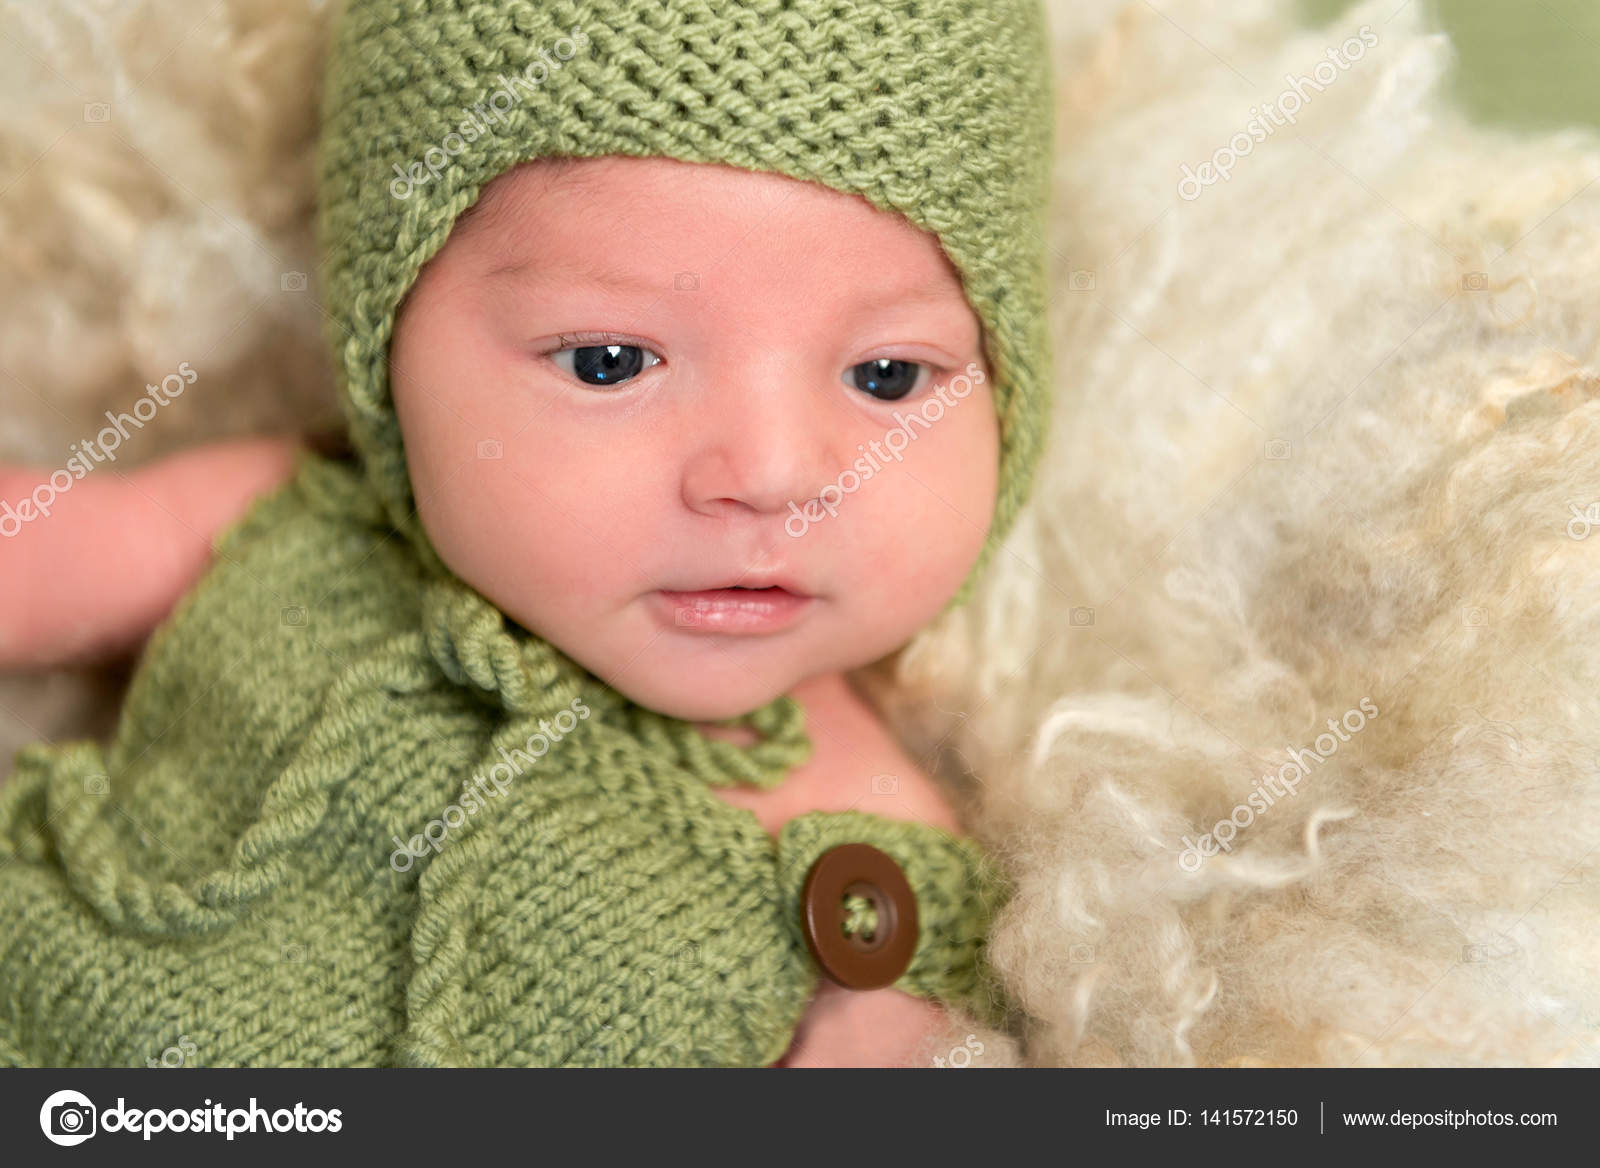 https://st3.depositphotos.com/1000619/14157/i/1600/depositphotos_141572150-stock-photo-baby-in-a-knitted-green.jpg